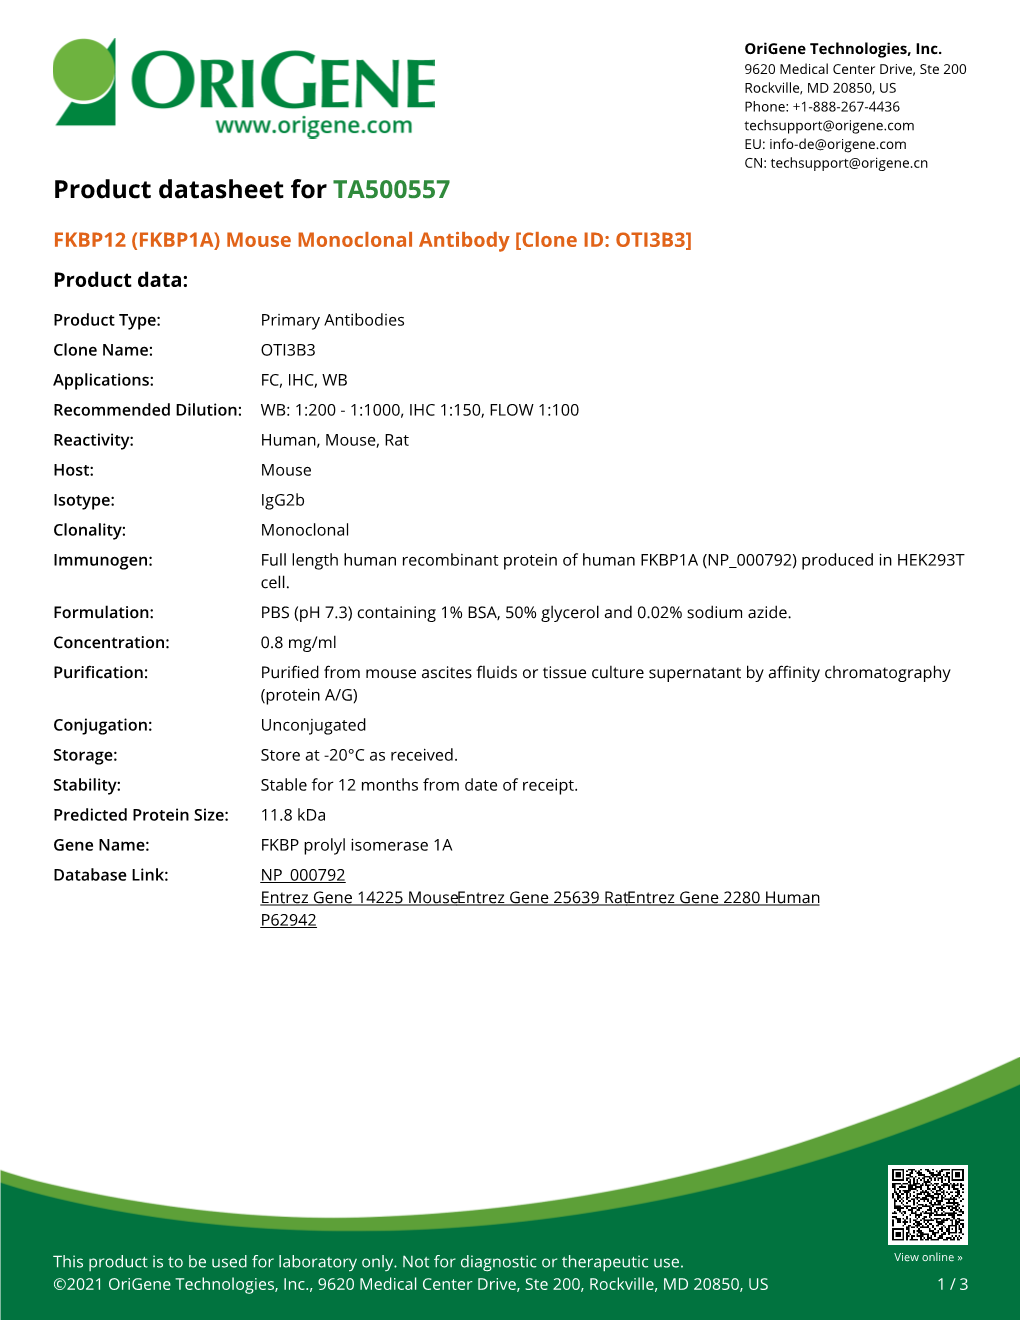 FKBP12 (FKBP1A) Mouse Monoclonal Antibody [Clone ID: OTI3B3] Product Data